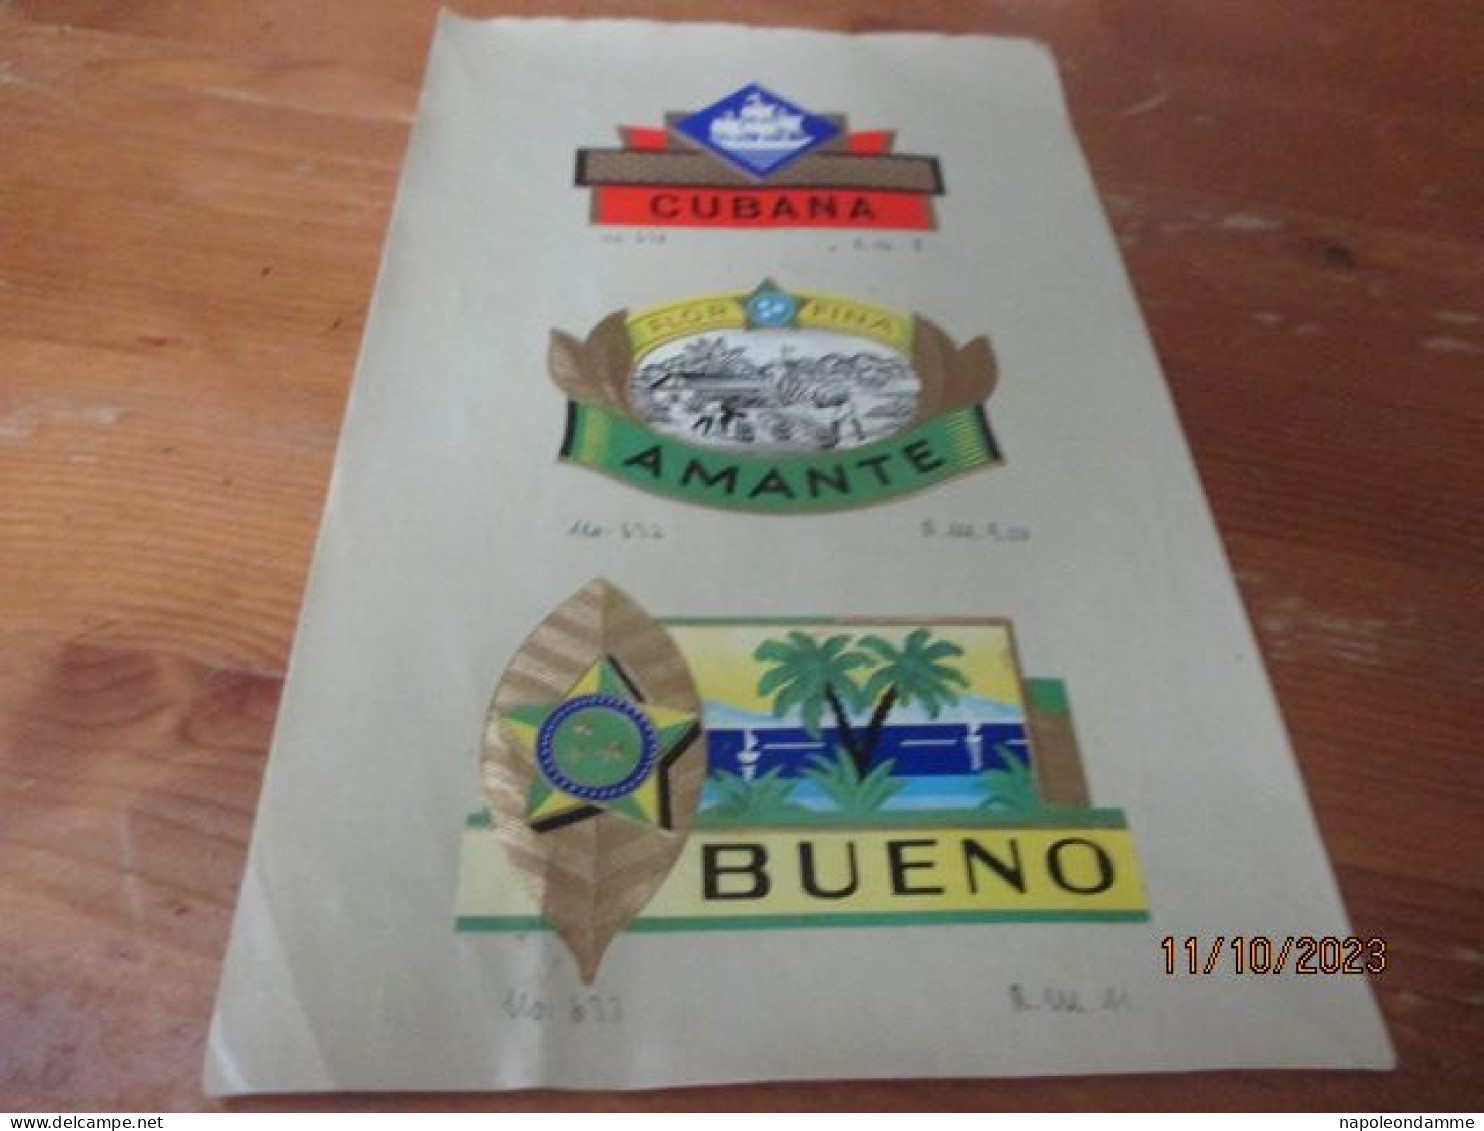 Etiketten Voorbeeldblad, 16 Cm X 25.50cm, Cubana, Amante, Bueno - Labels